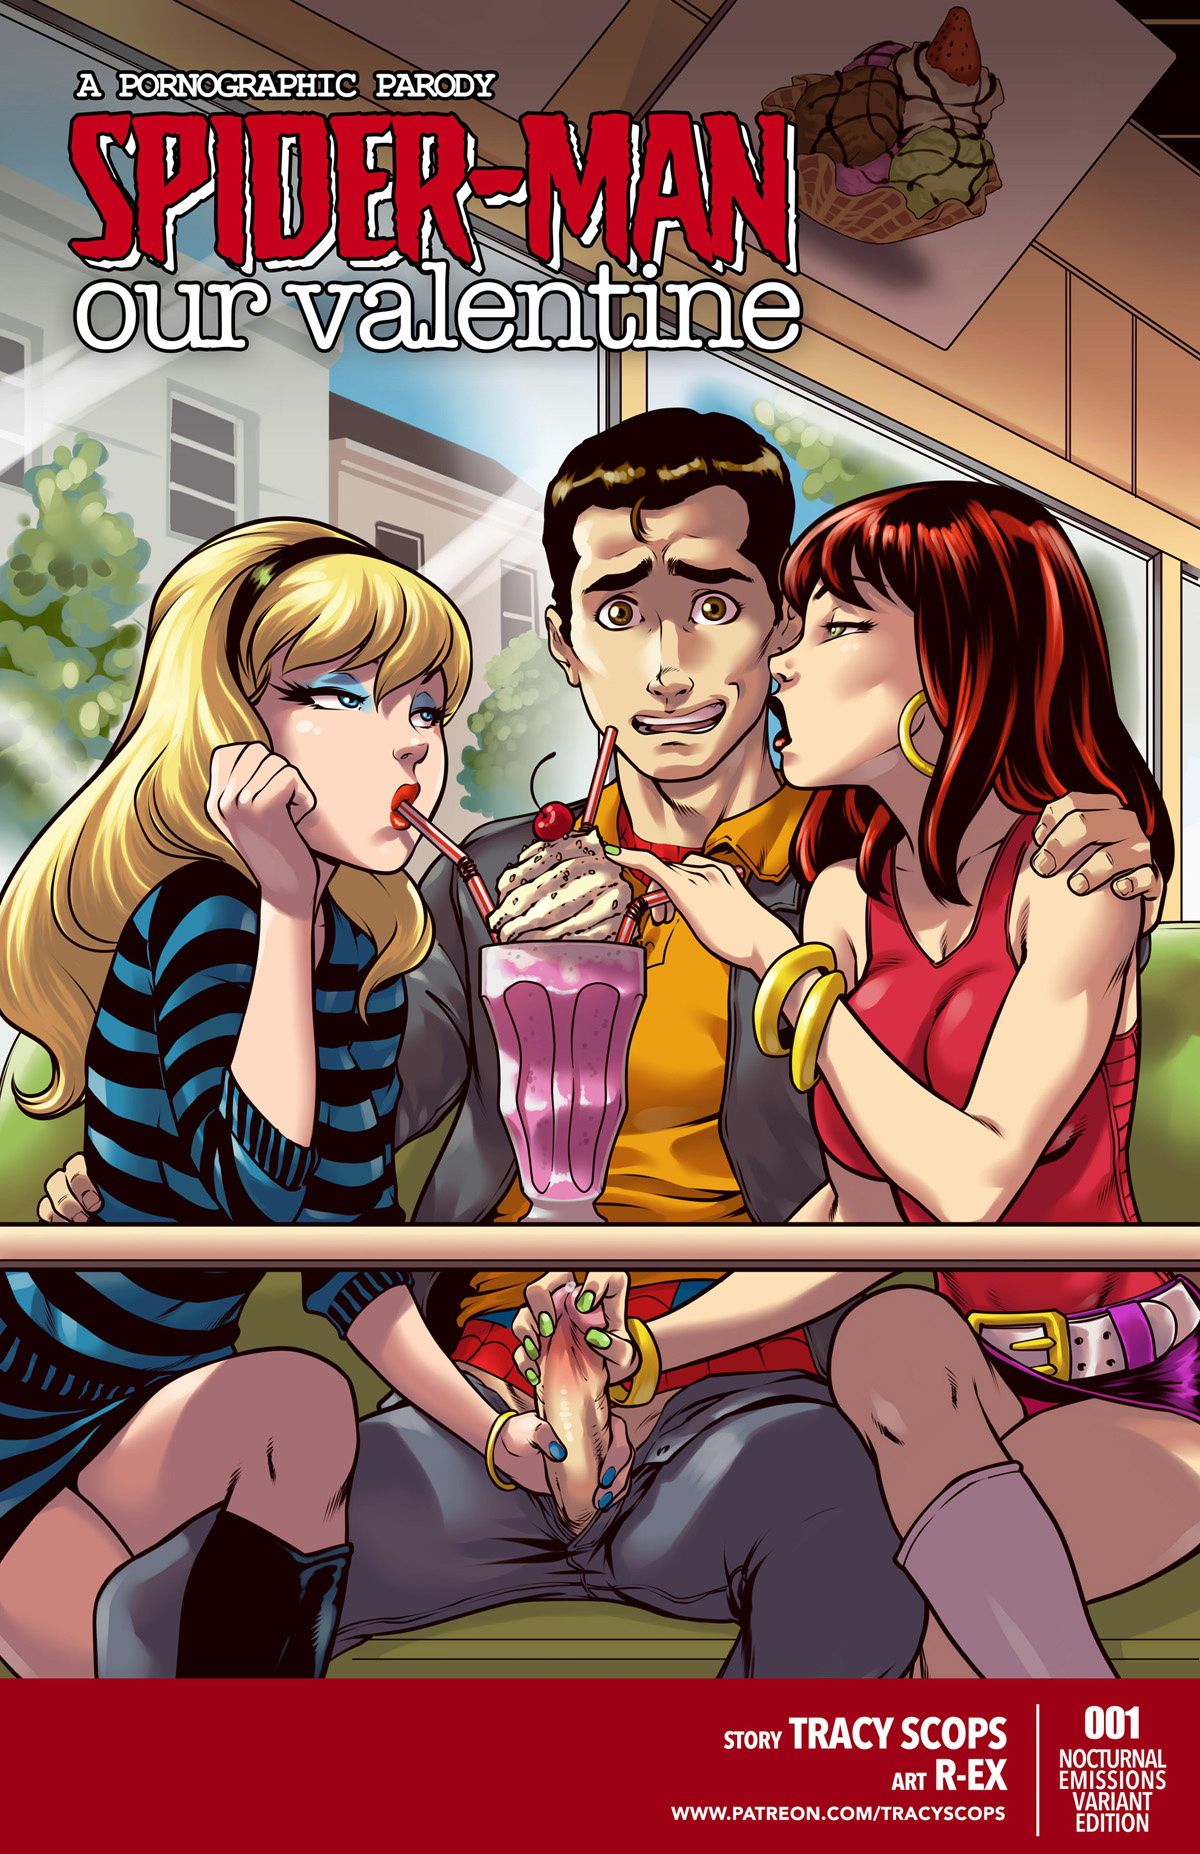 Our Valentine (Spider-Man) Tracy Scops Porn Comic